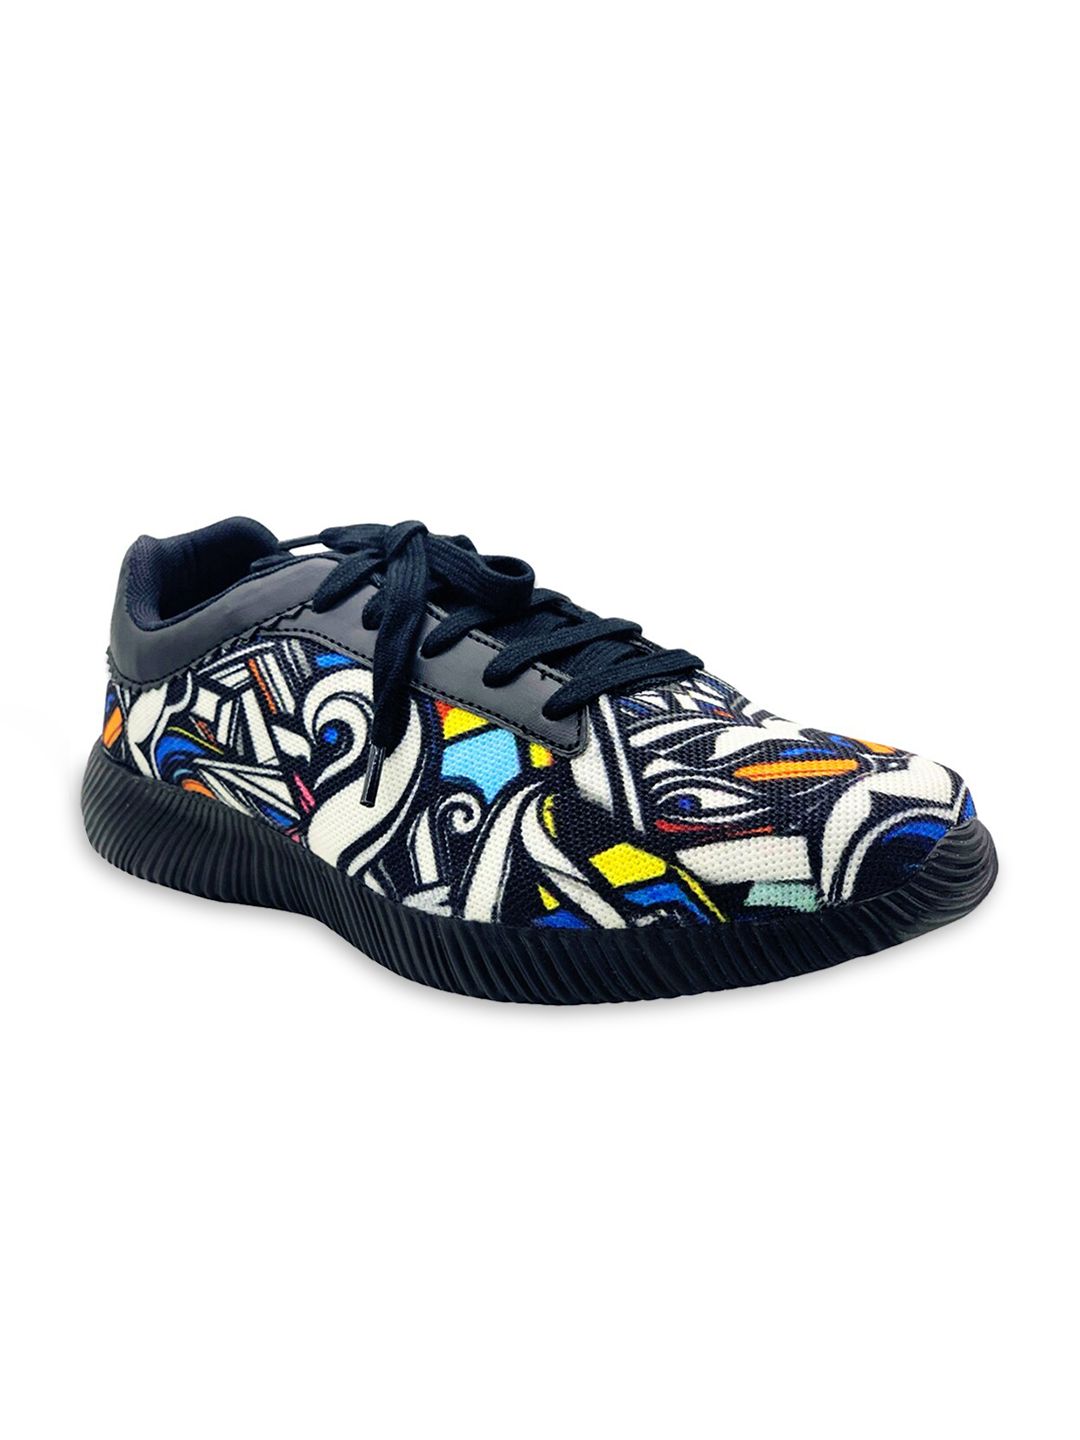 KazarMax Women Black & Multicoloured Mesh Walking Non-Marking Shoes Price in India